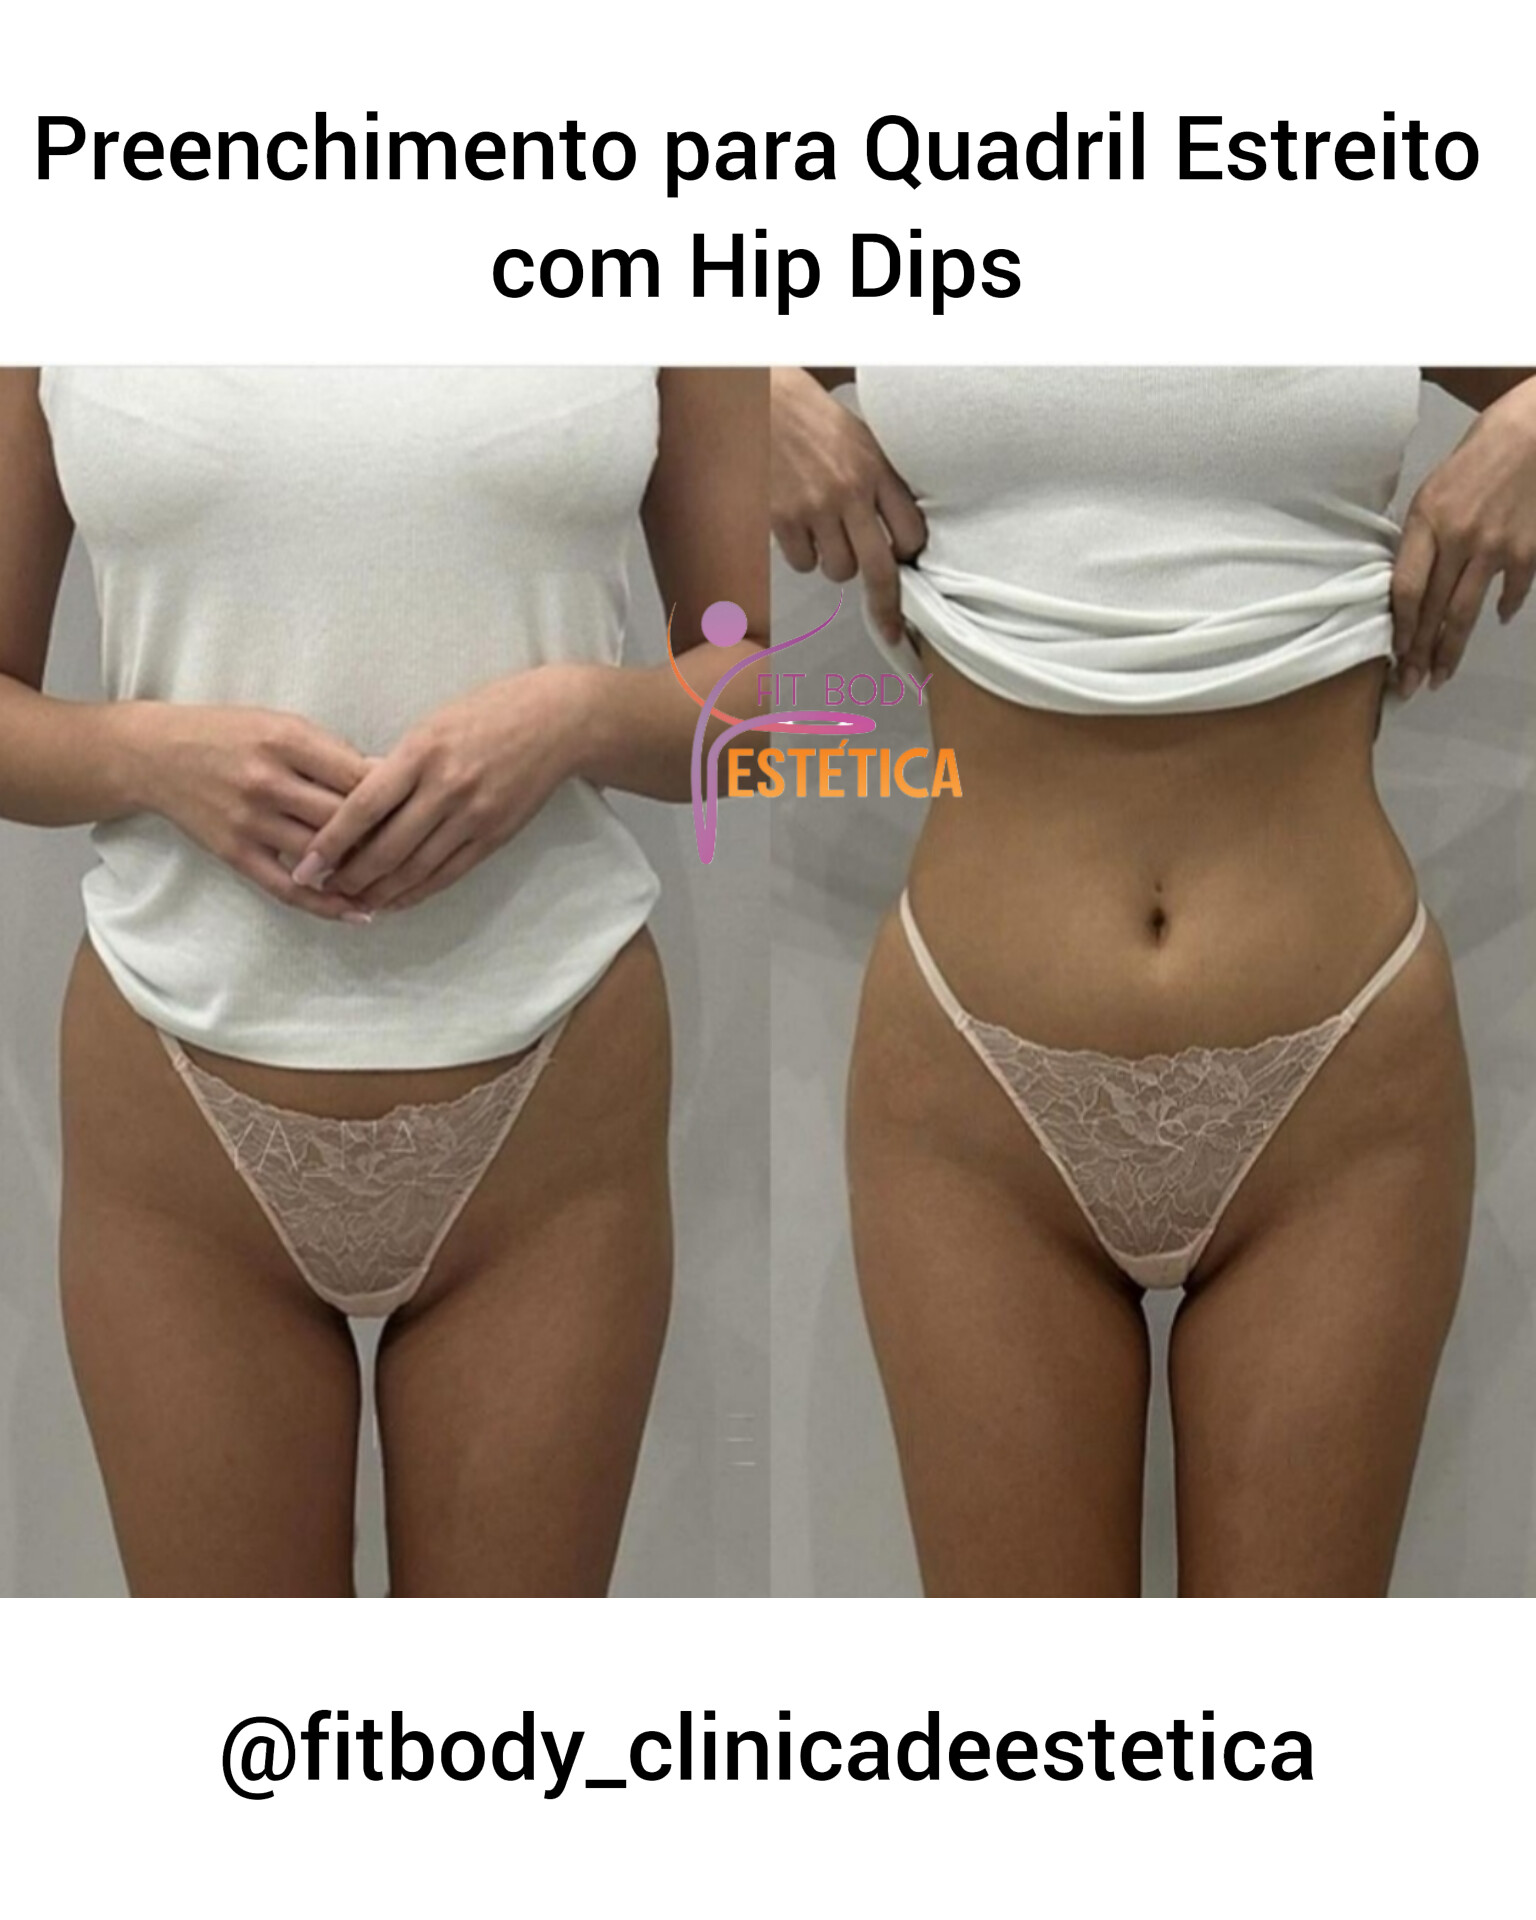 Aumento de Quadril para Tratar Hip Dips - Clínica Fit Body Estética